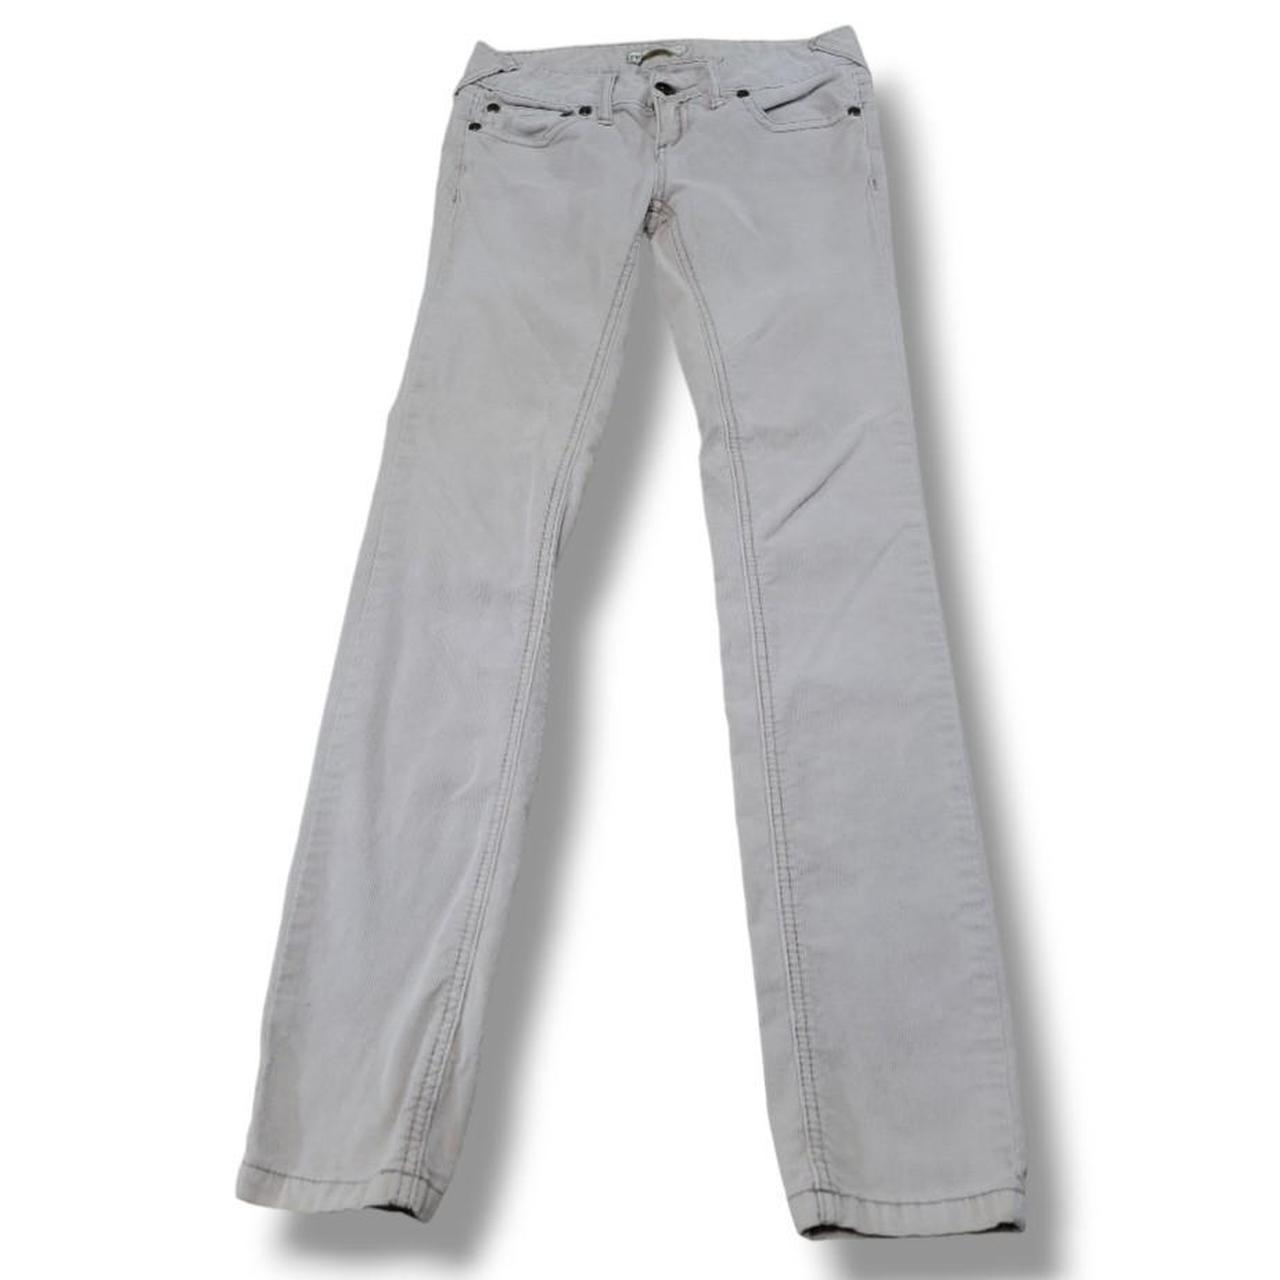 Free photo Pants Jeans Color Cream